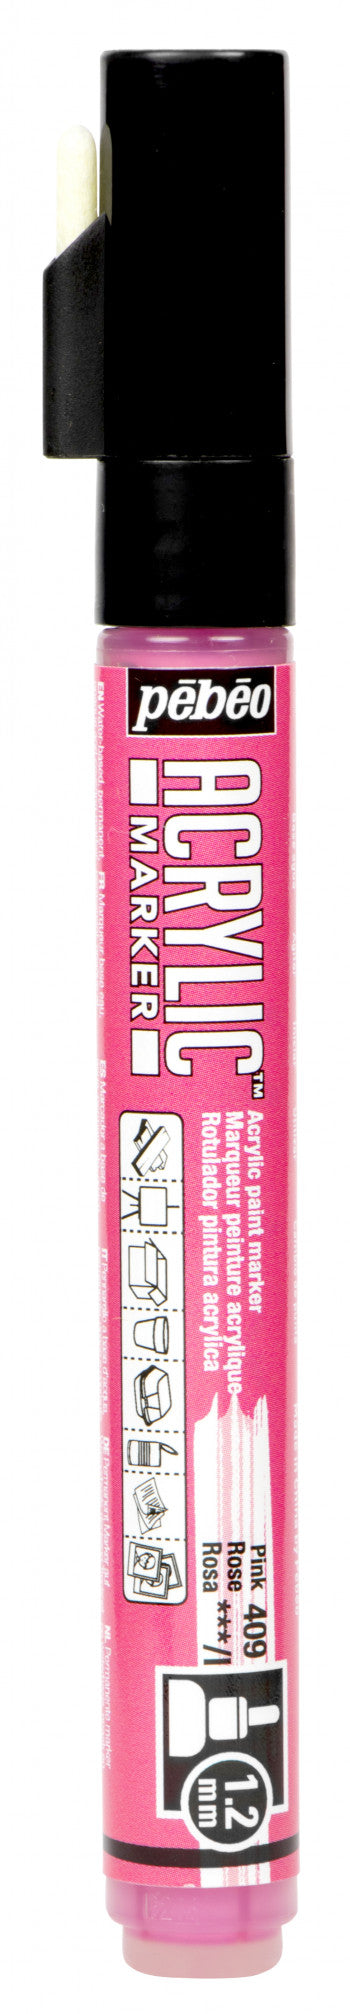 Acrylic Marker 1.2mm Pebeo Pink - 409